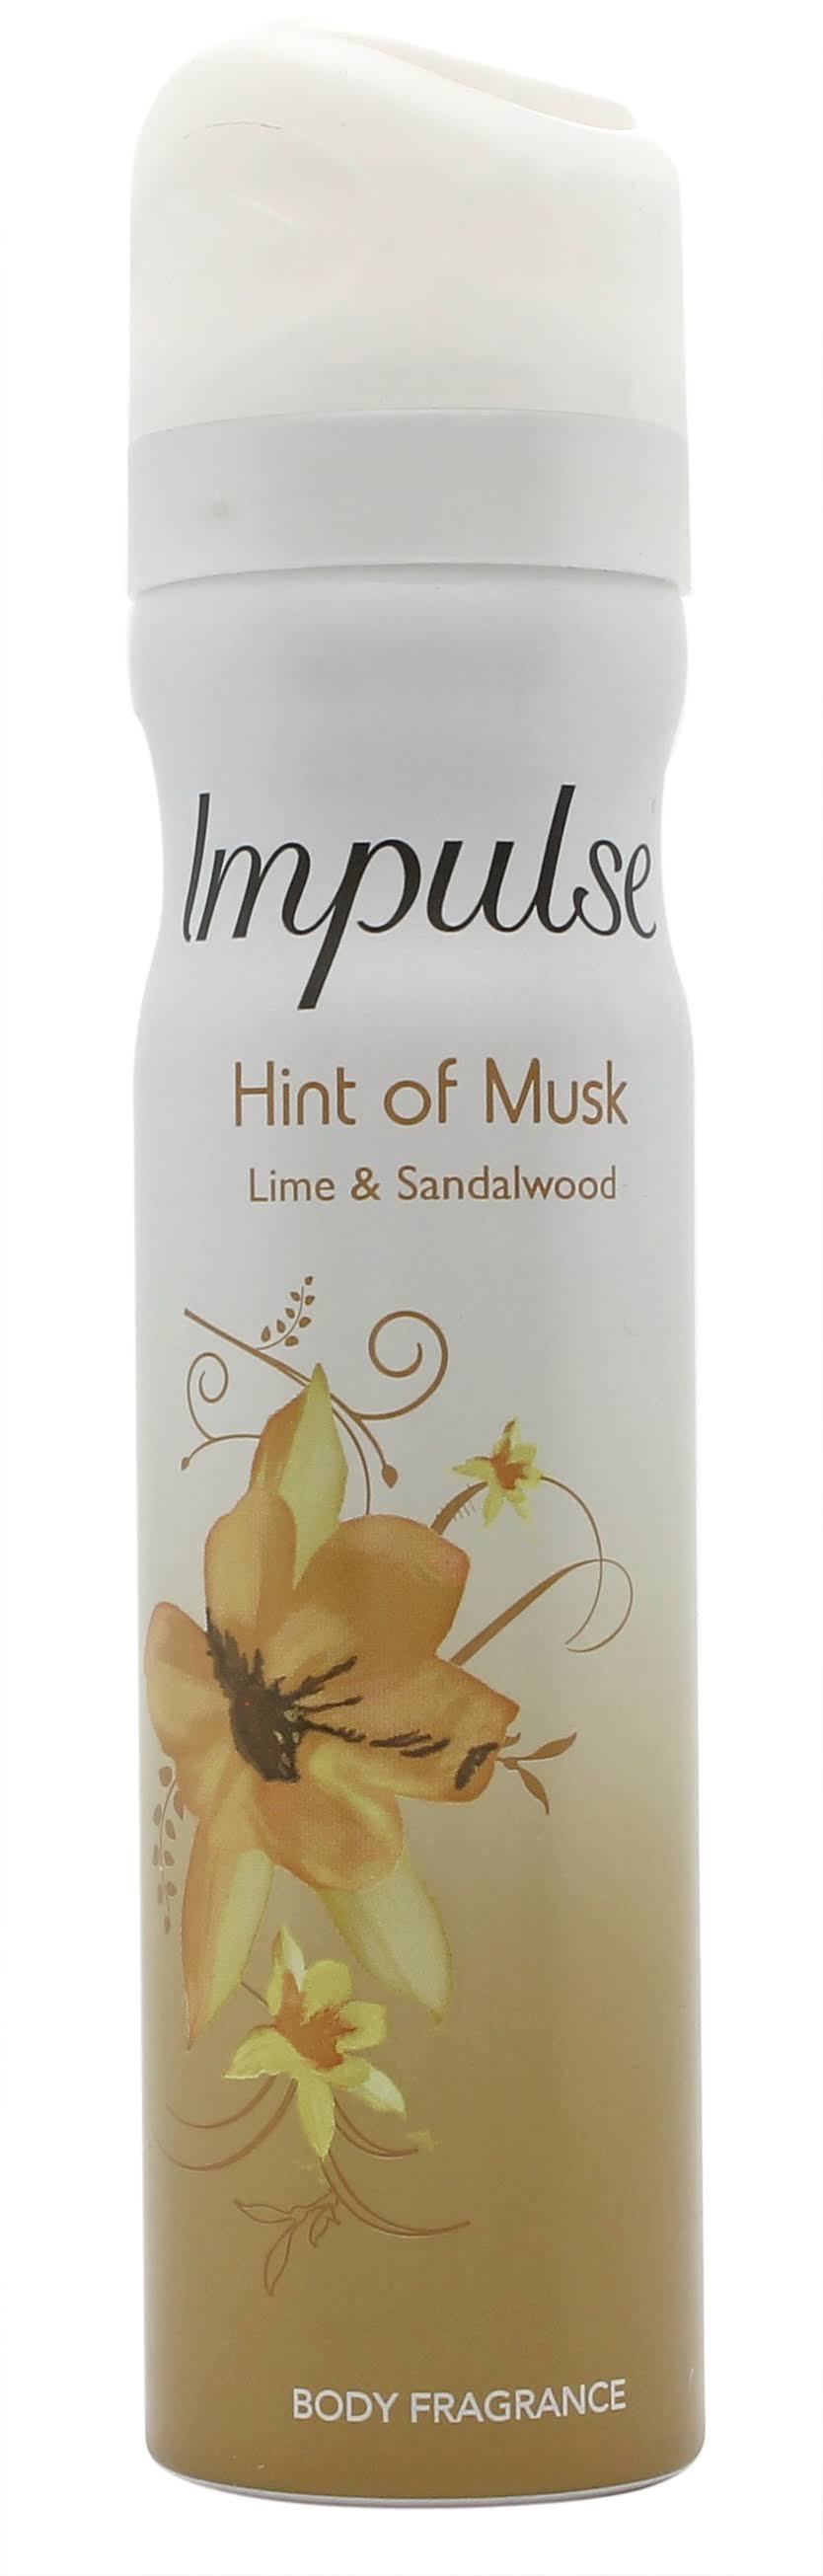 Impulse Body Spray - Hint of Musk - 75ml